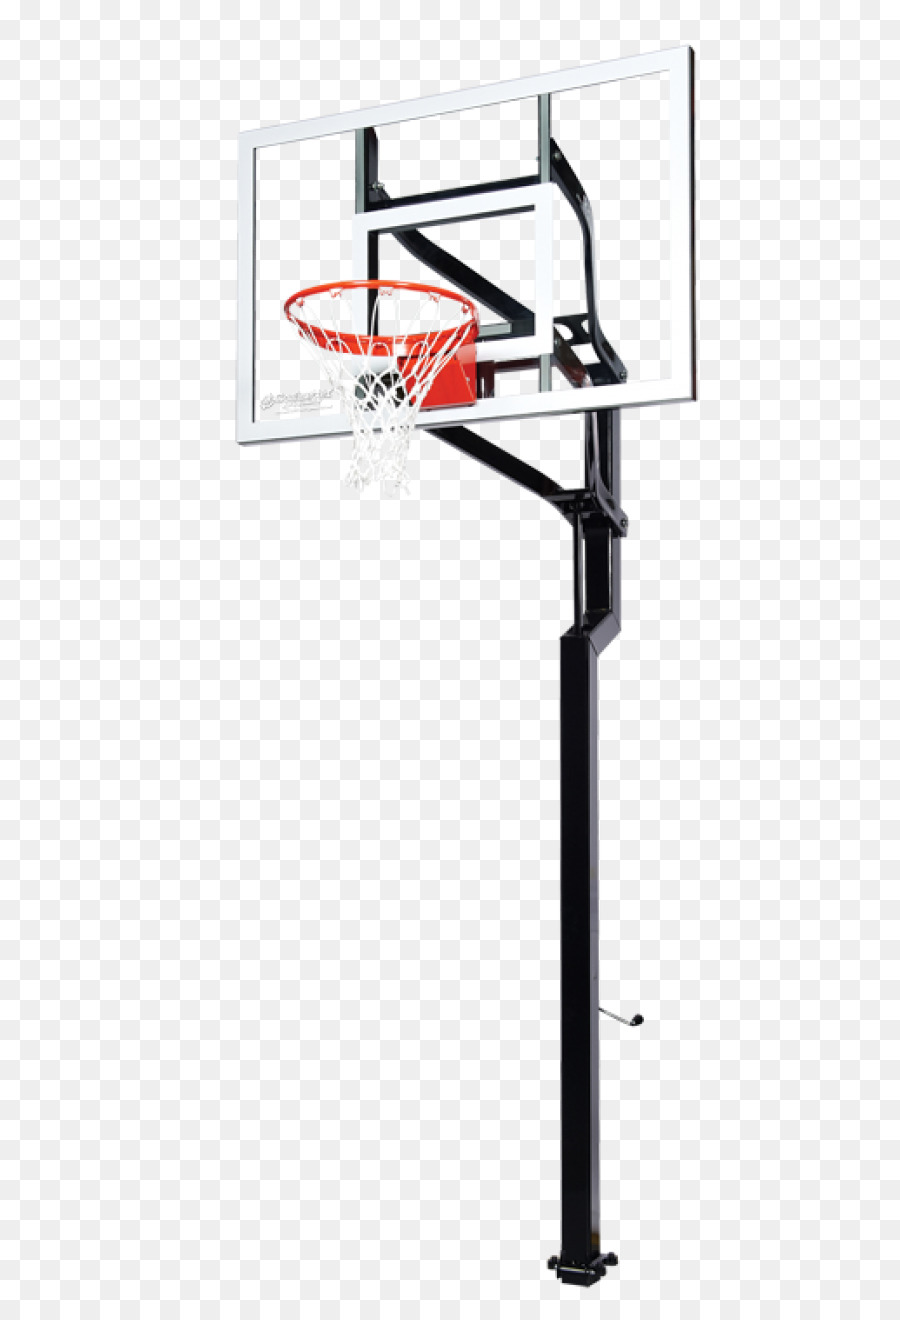 Basketball Backboard Keeper Goals Canestro Breakaway rim - basketball rim png download - 600*1304 - Free Transparent Basketball png Download.